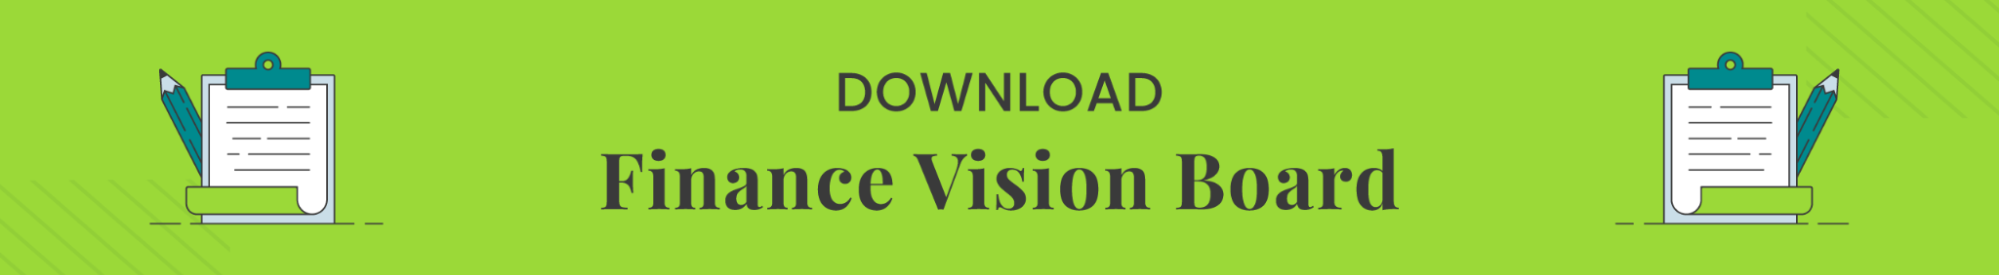 Download Finance Vision Board